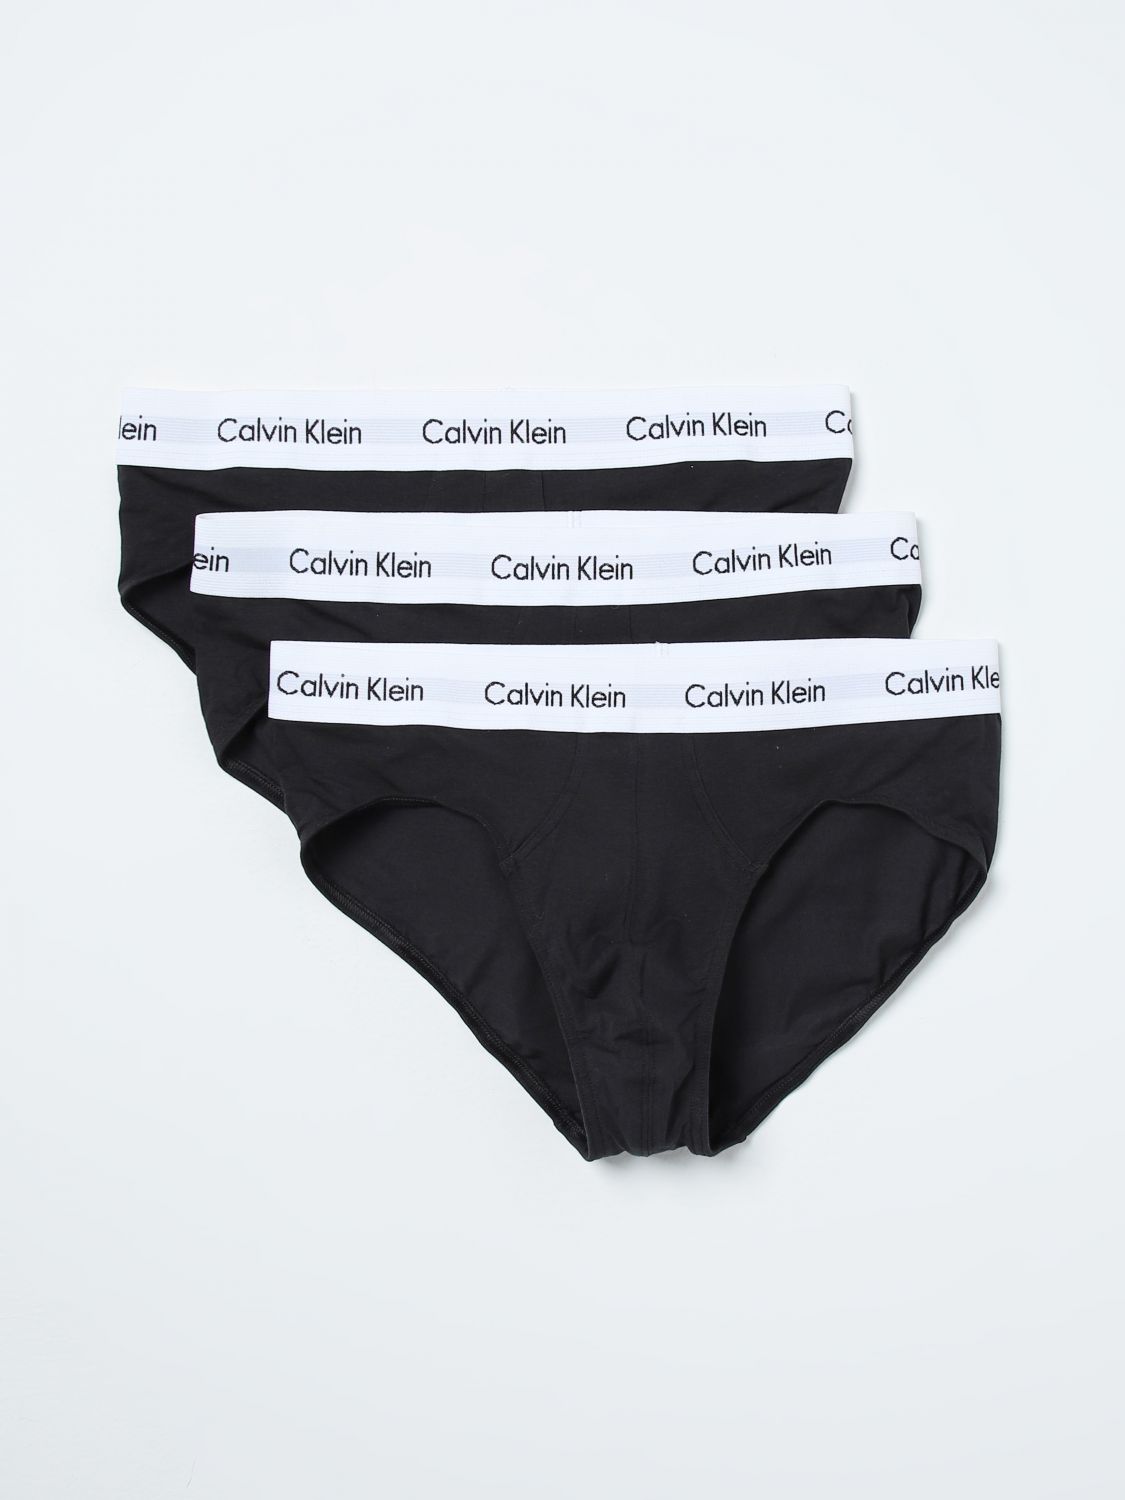 Calvin Klein Underwear CALVIN KLEIN Men color Black